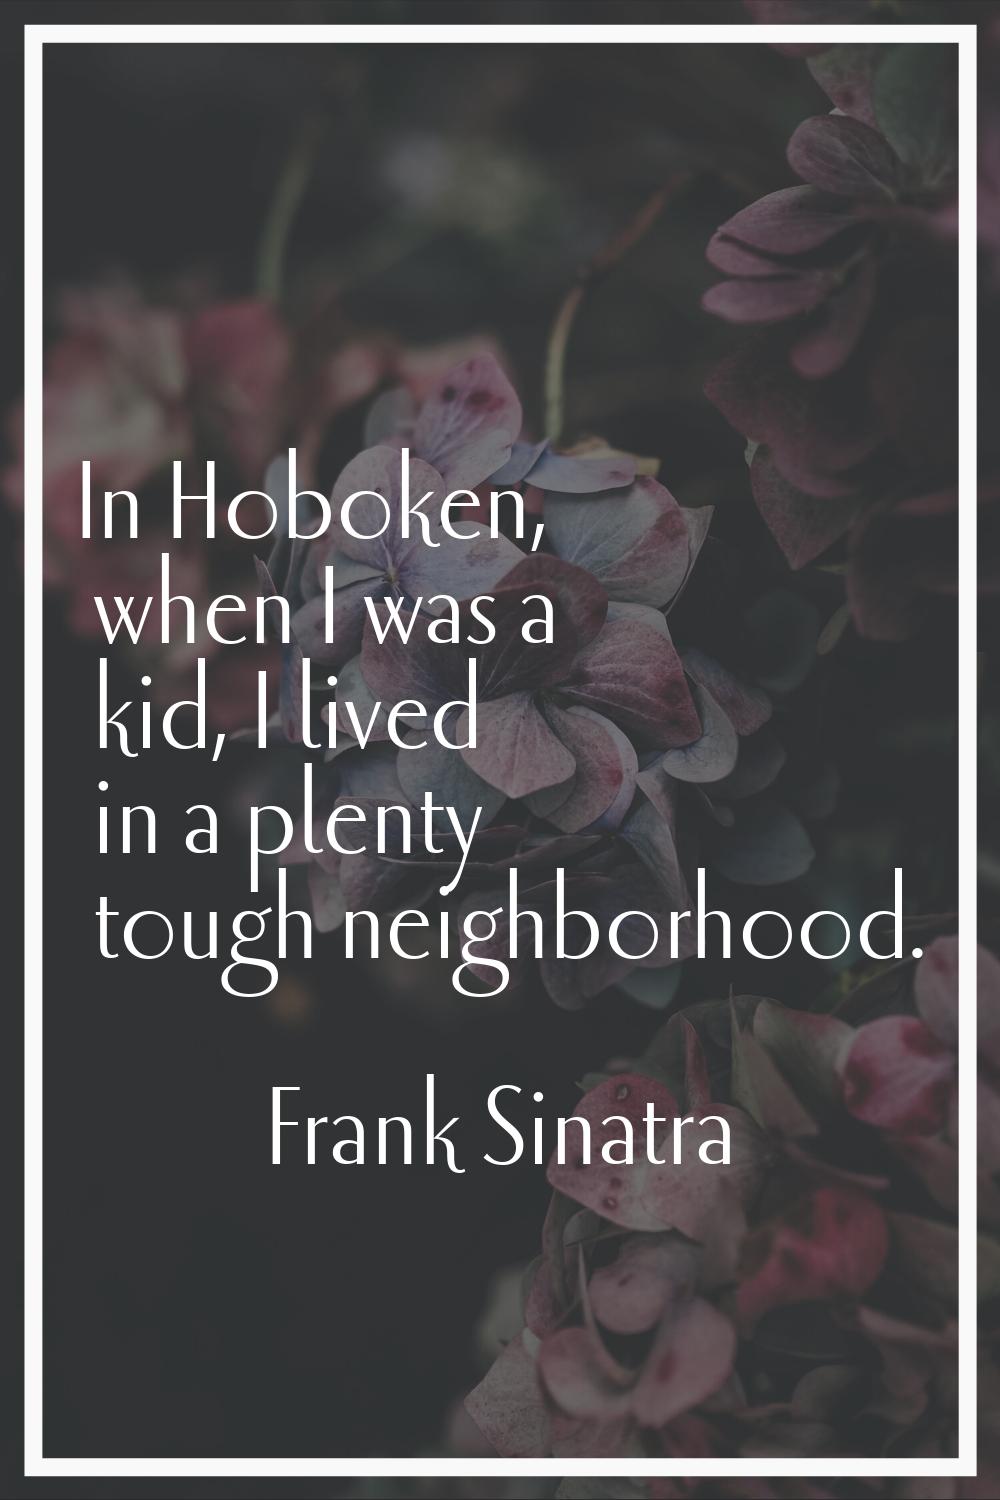 In Hoboken, when I was a kid, I lived in a plenty tough neighborhood.